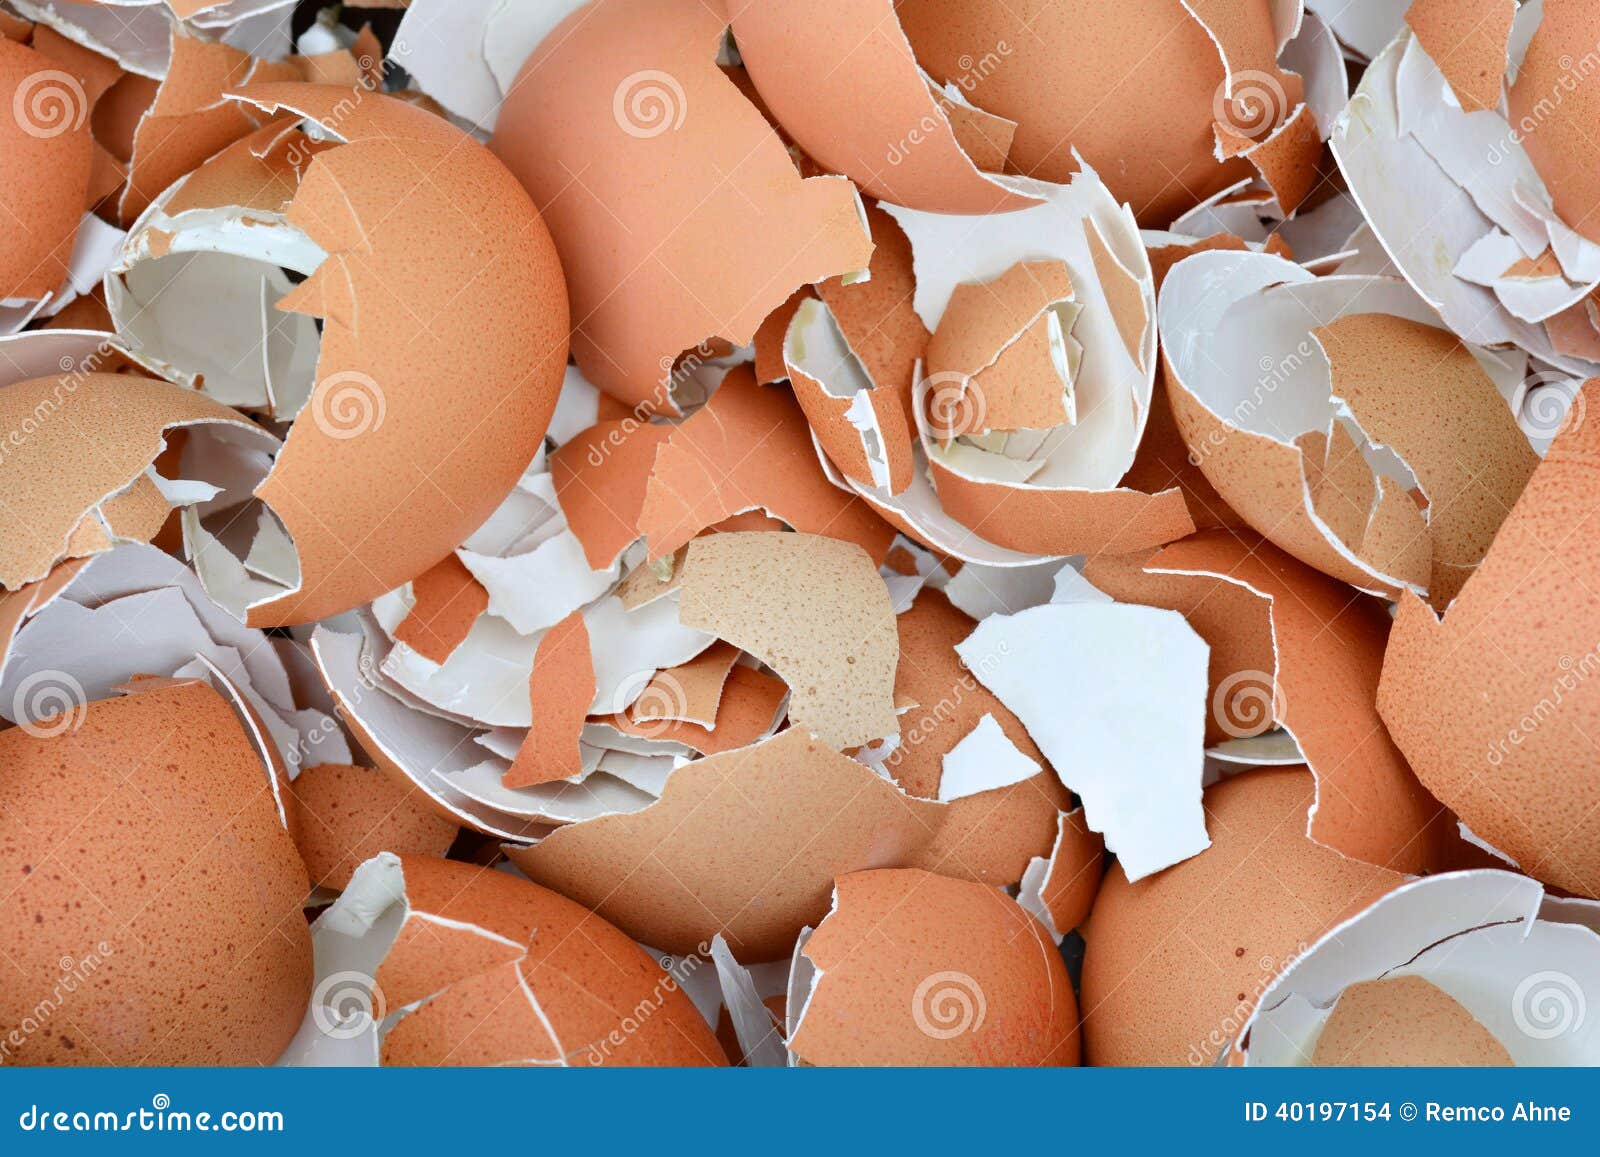 crushed eggshells